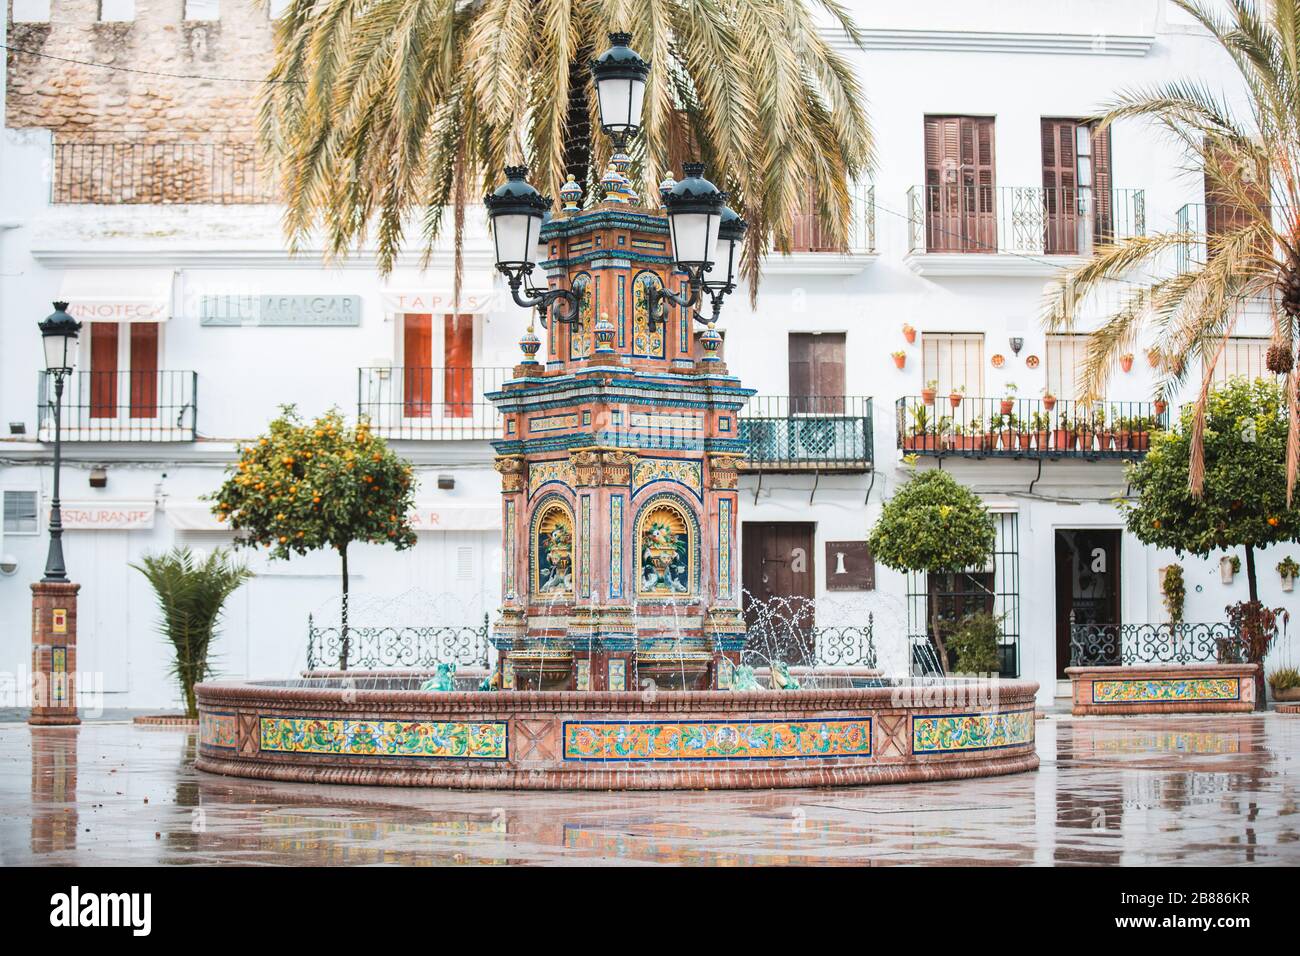 Tiled Fountain 'Fountain of the Little Fish' (Fuente de los Pescaditos), located at the Plaza de Espana Stock Photo